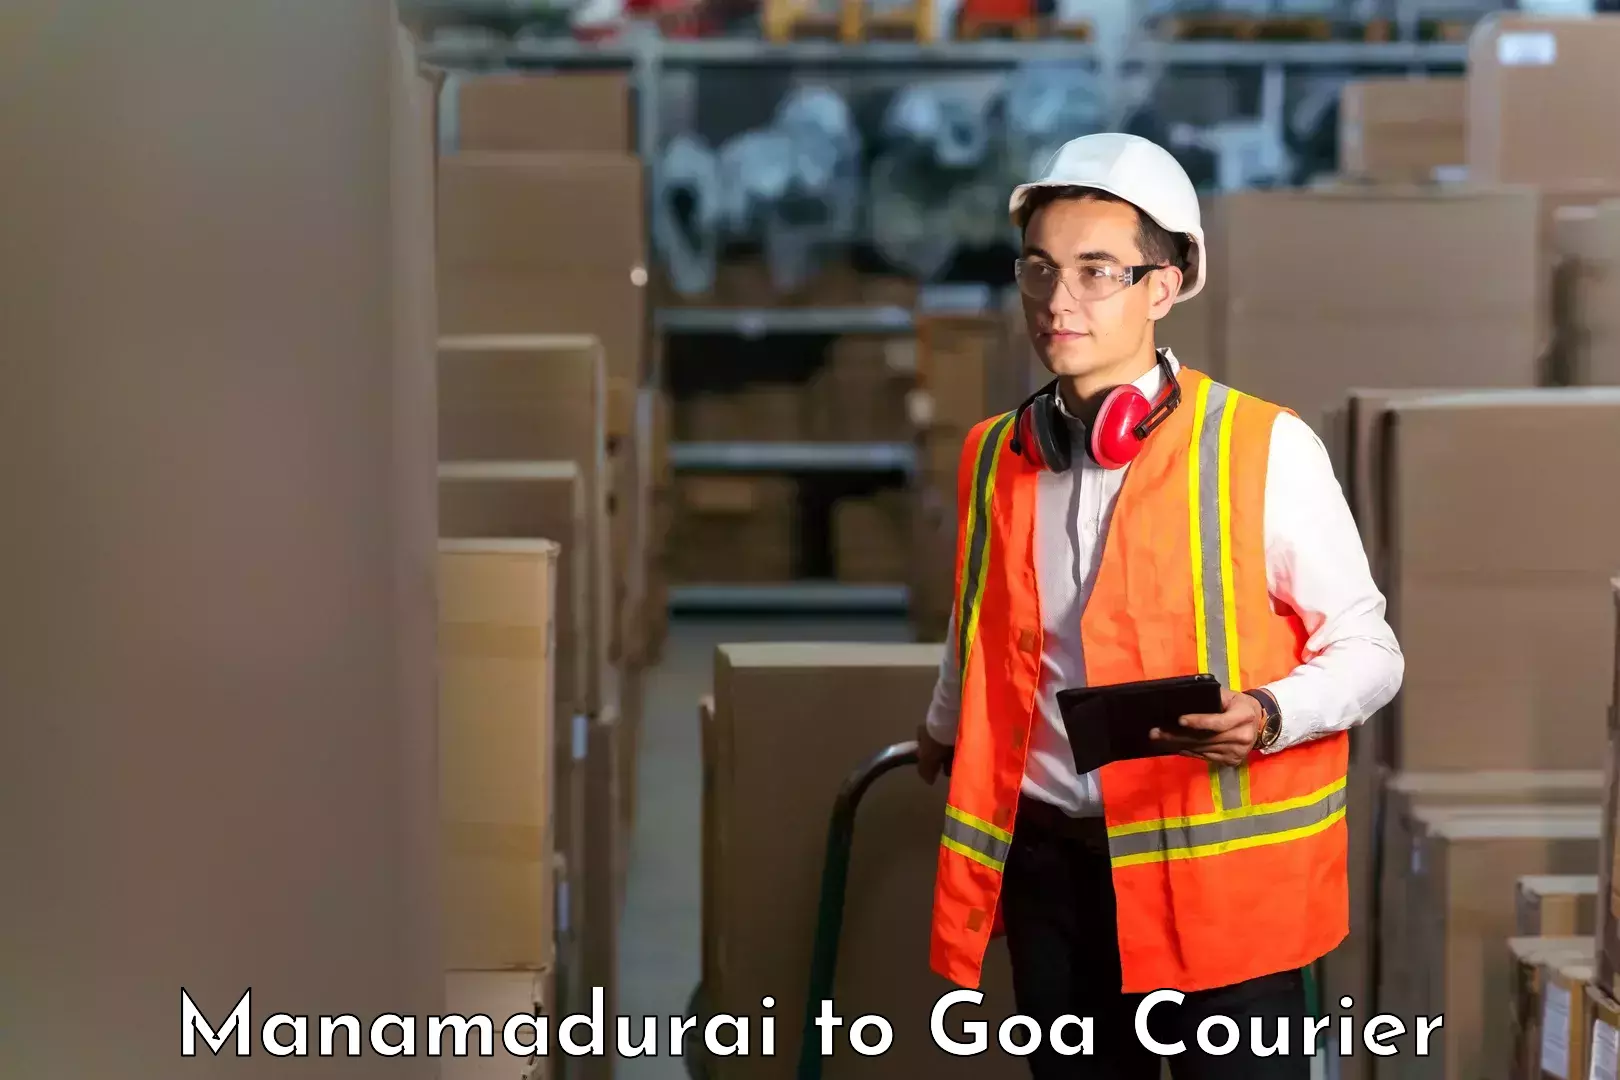 Courier service booking Manamadurai to IIT Goa